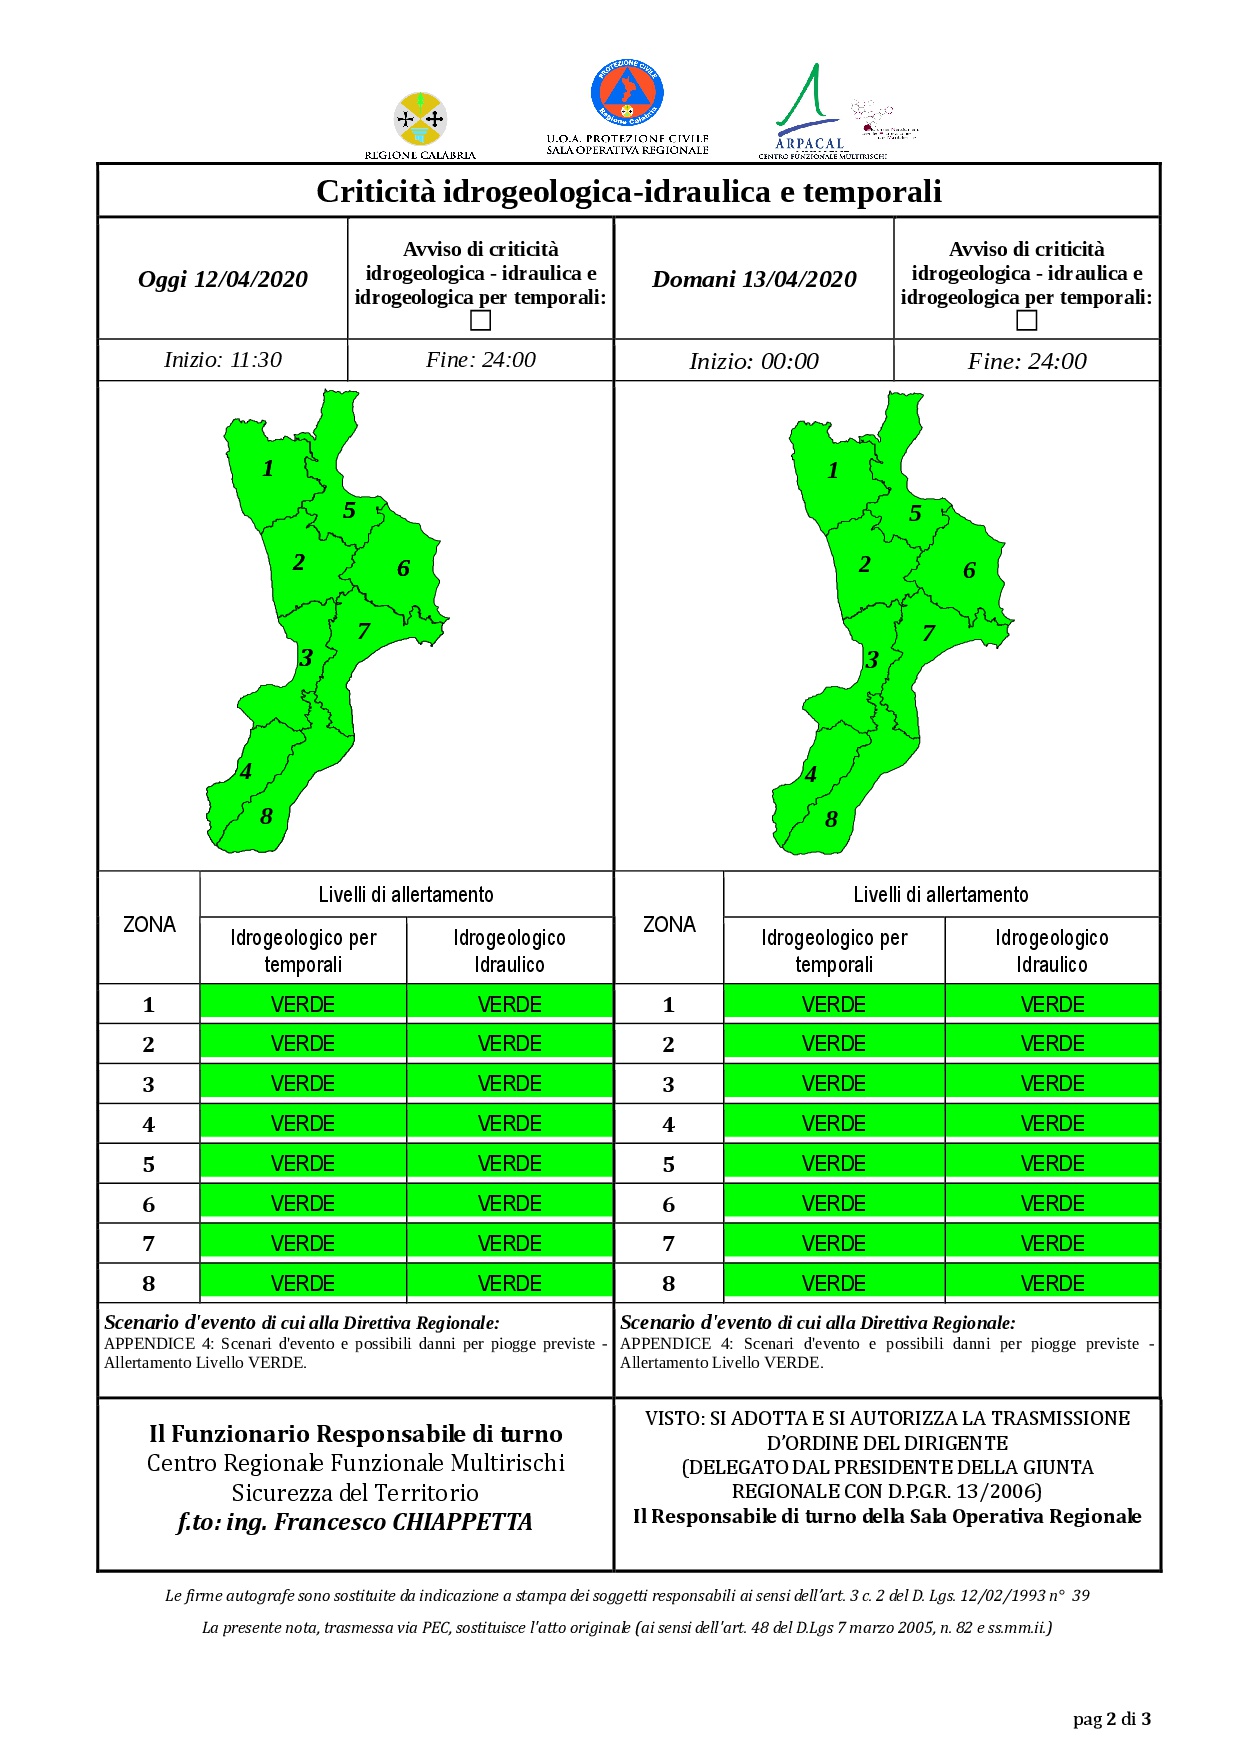 Criticità idrogeologica-idraulica e temporali in Calabria 12-04-2020